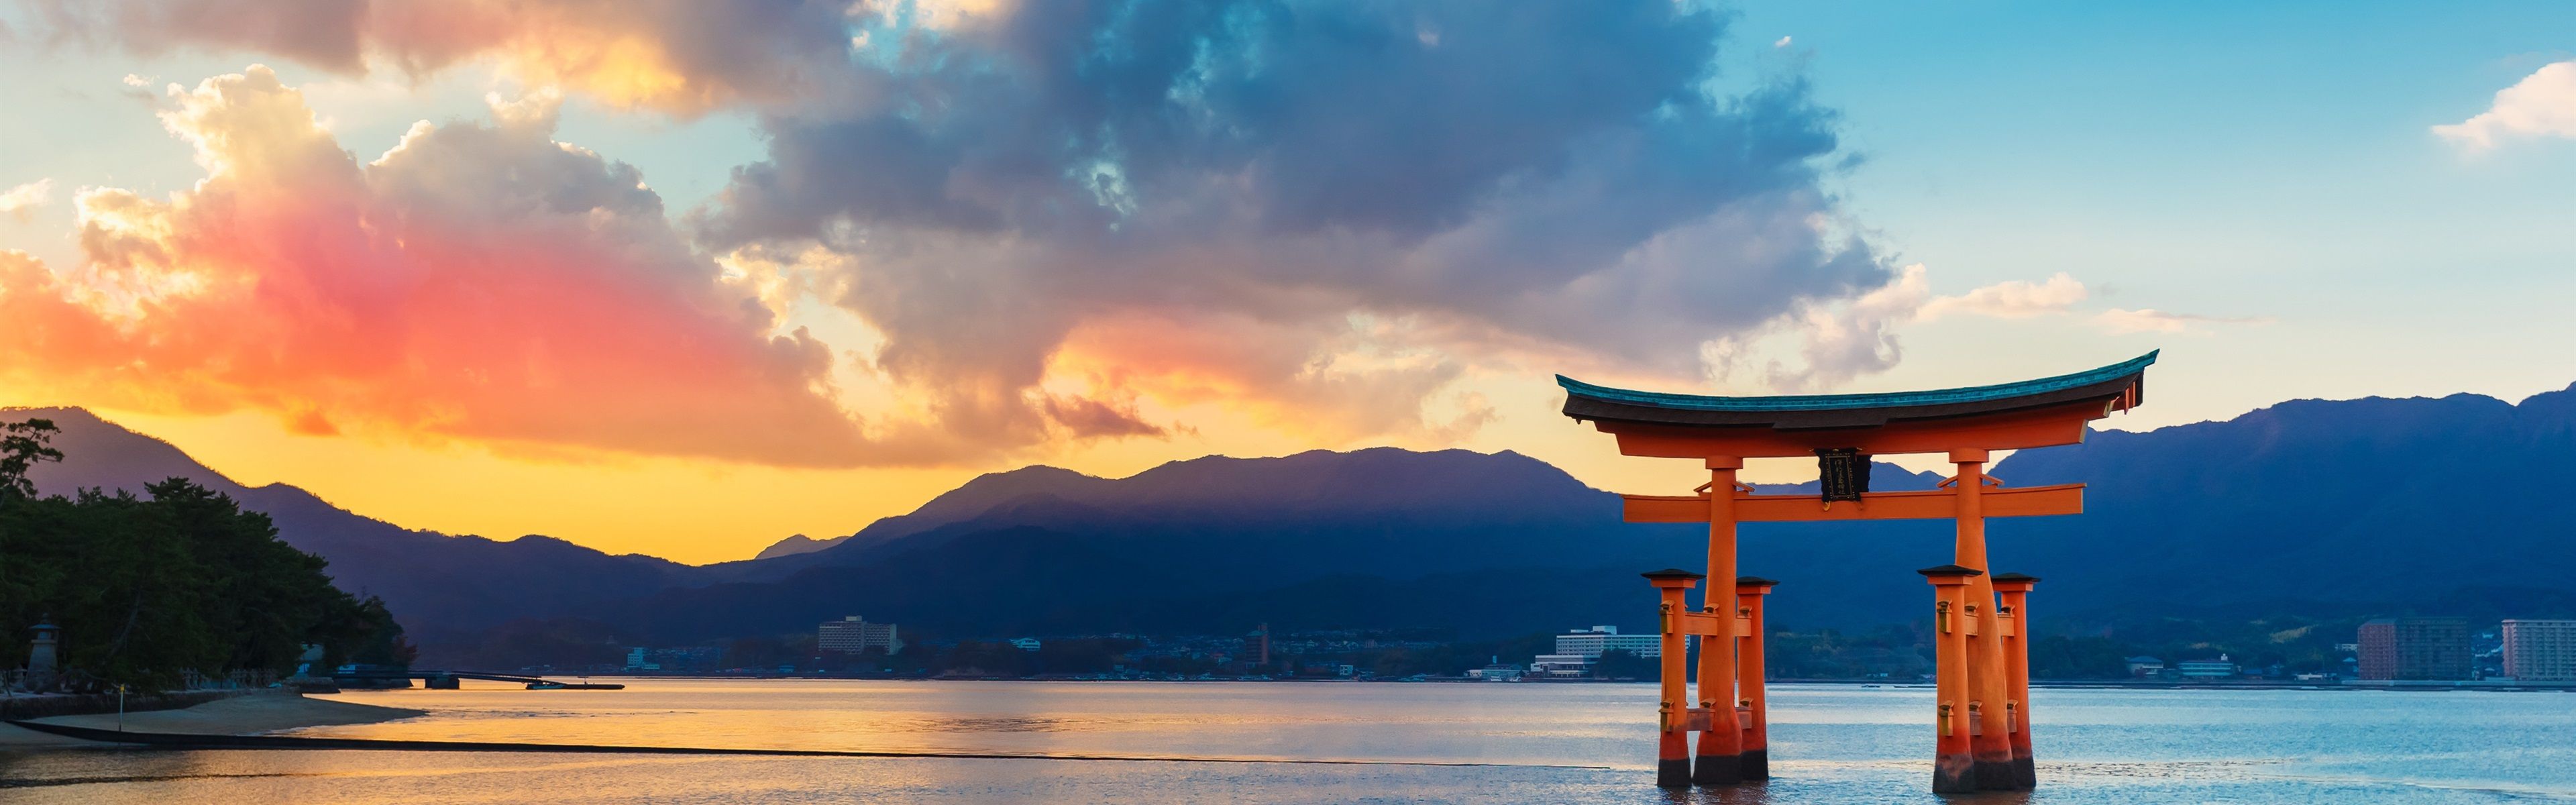 Torii Gate, Sea, Sunset, Japan 1080x1920 IPhone 8 7 6 6S Plus